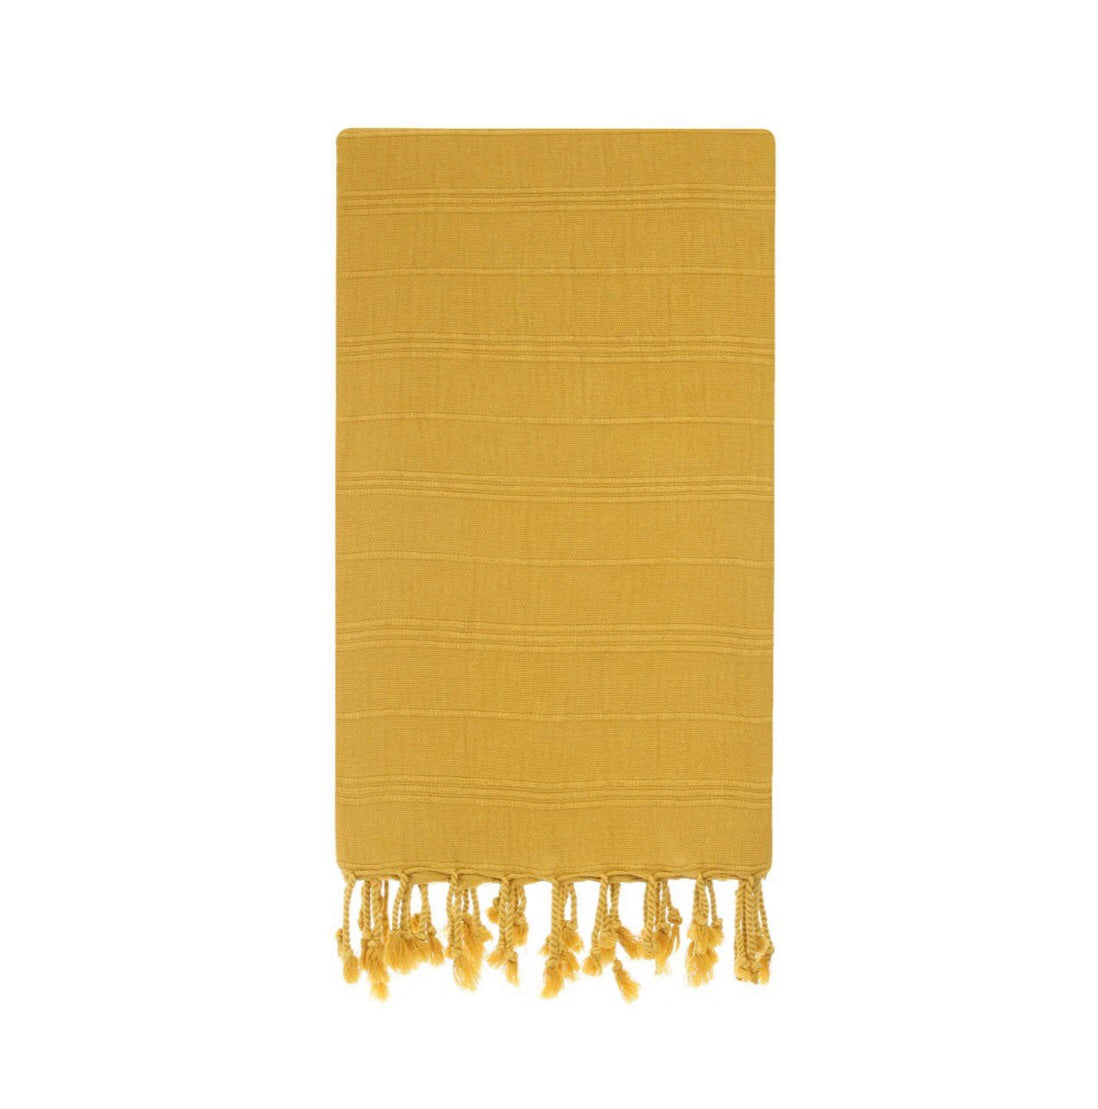 Turkish Cotton towel for bath or beach in Mustard